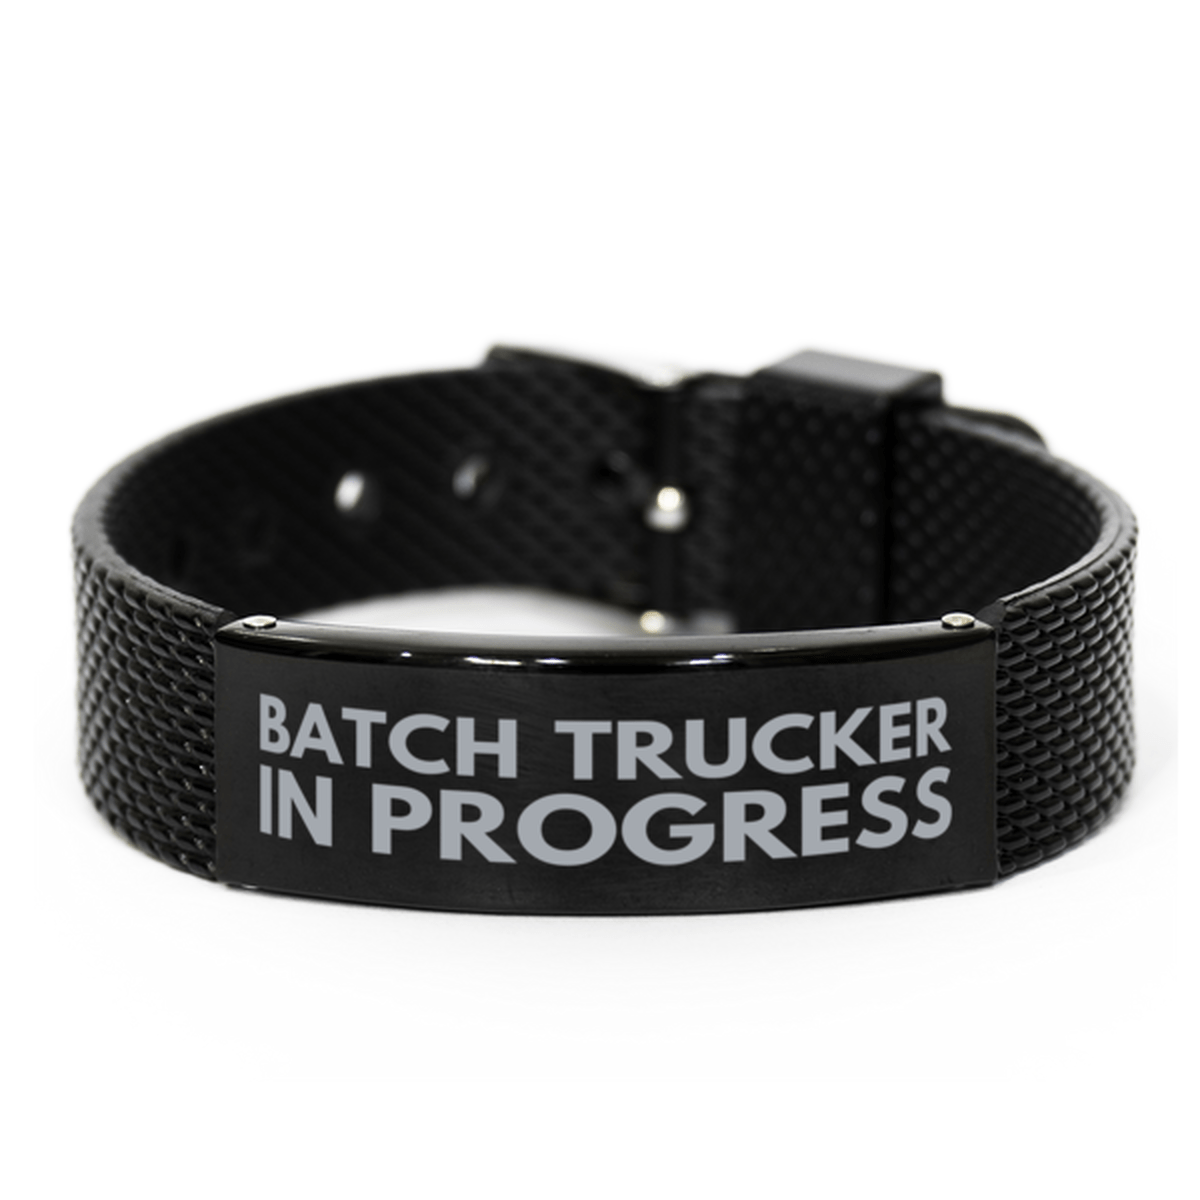 Inspirational Batch Trucker Black Shark Mesh Bracelet, Batch Trucker In Progress, Best Graduation Gifts for Students